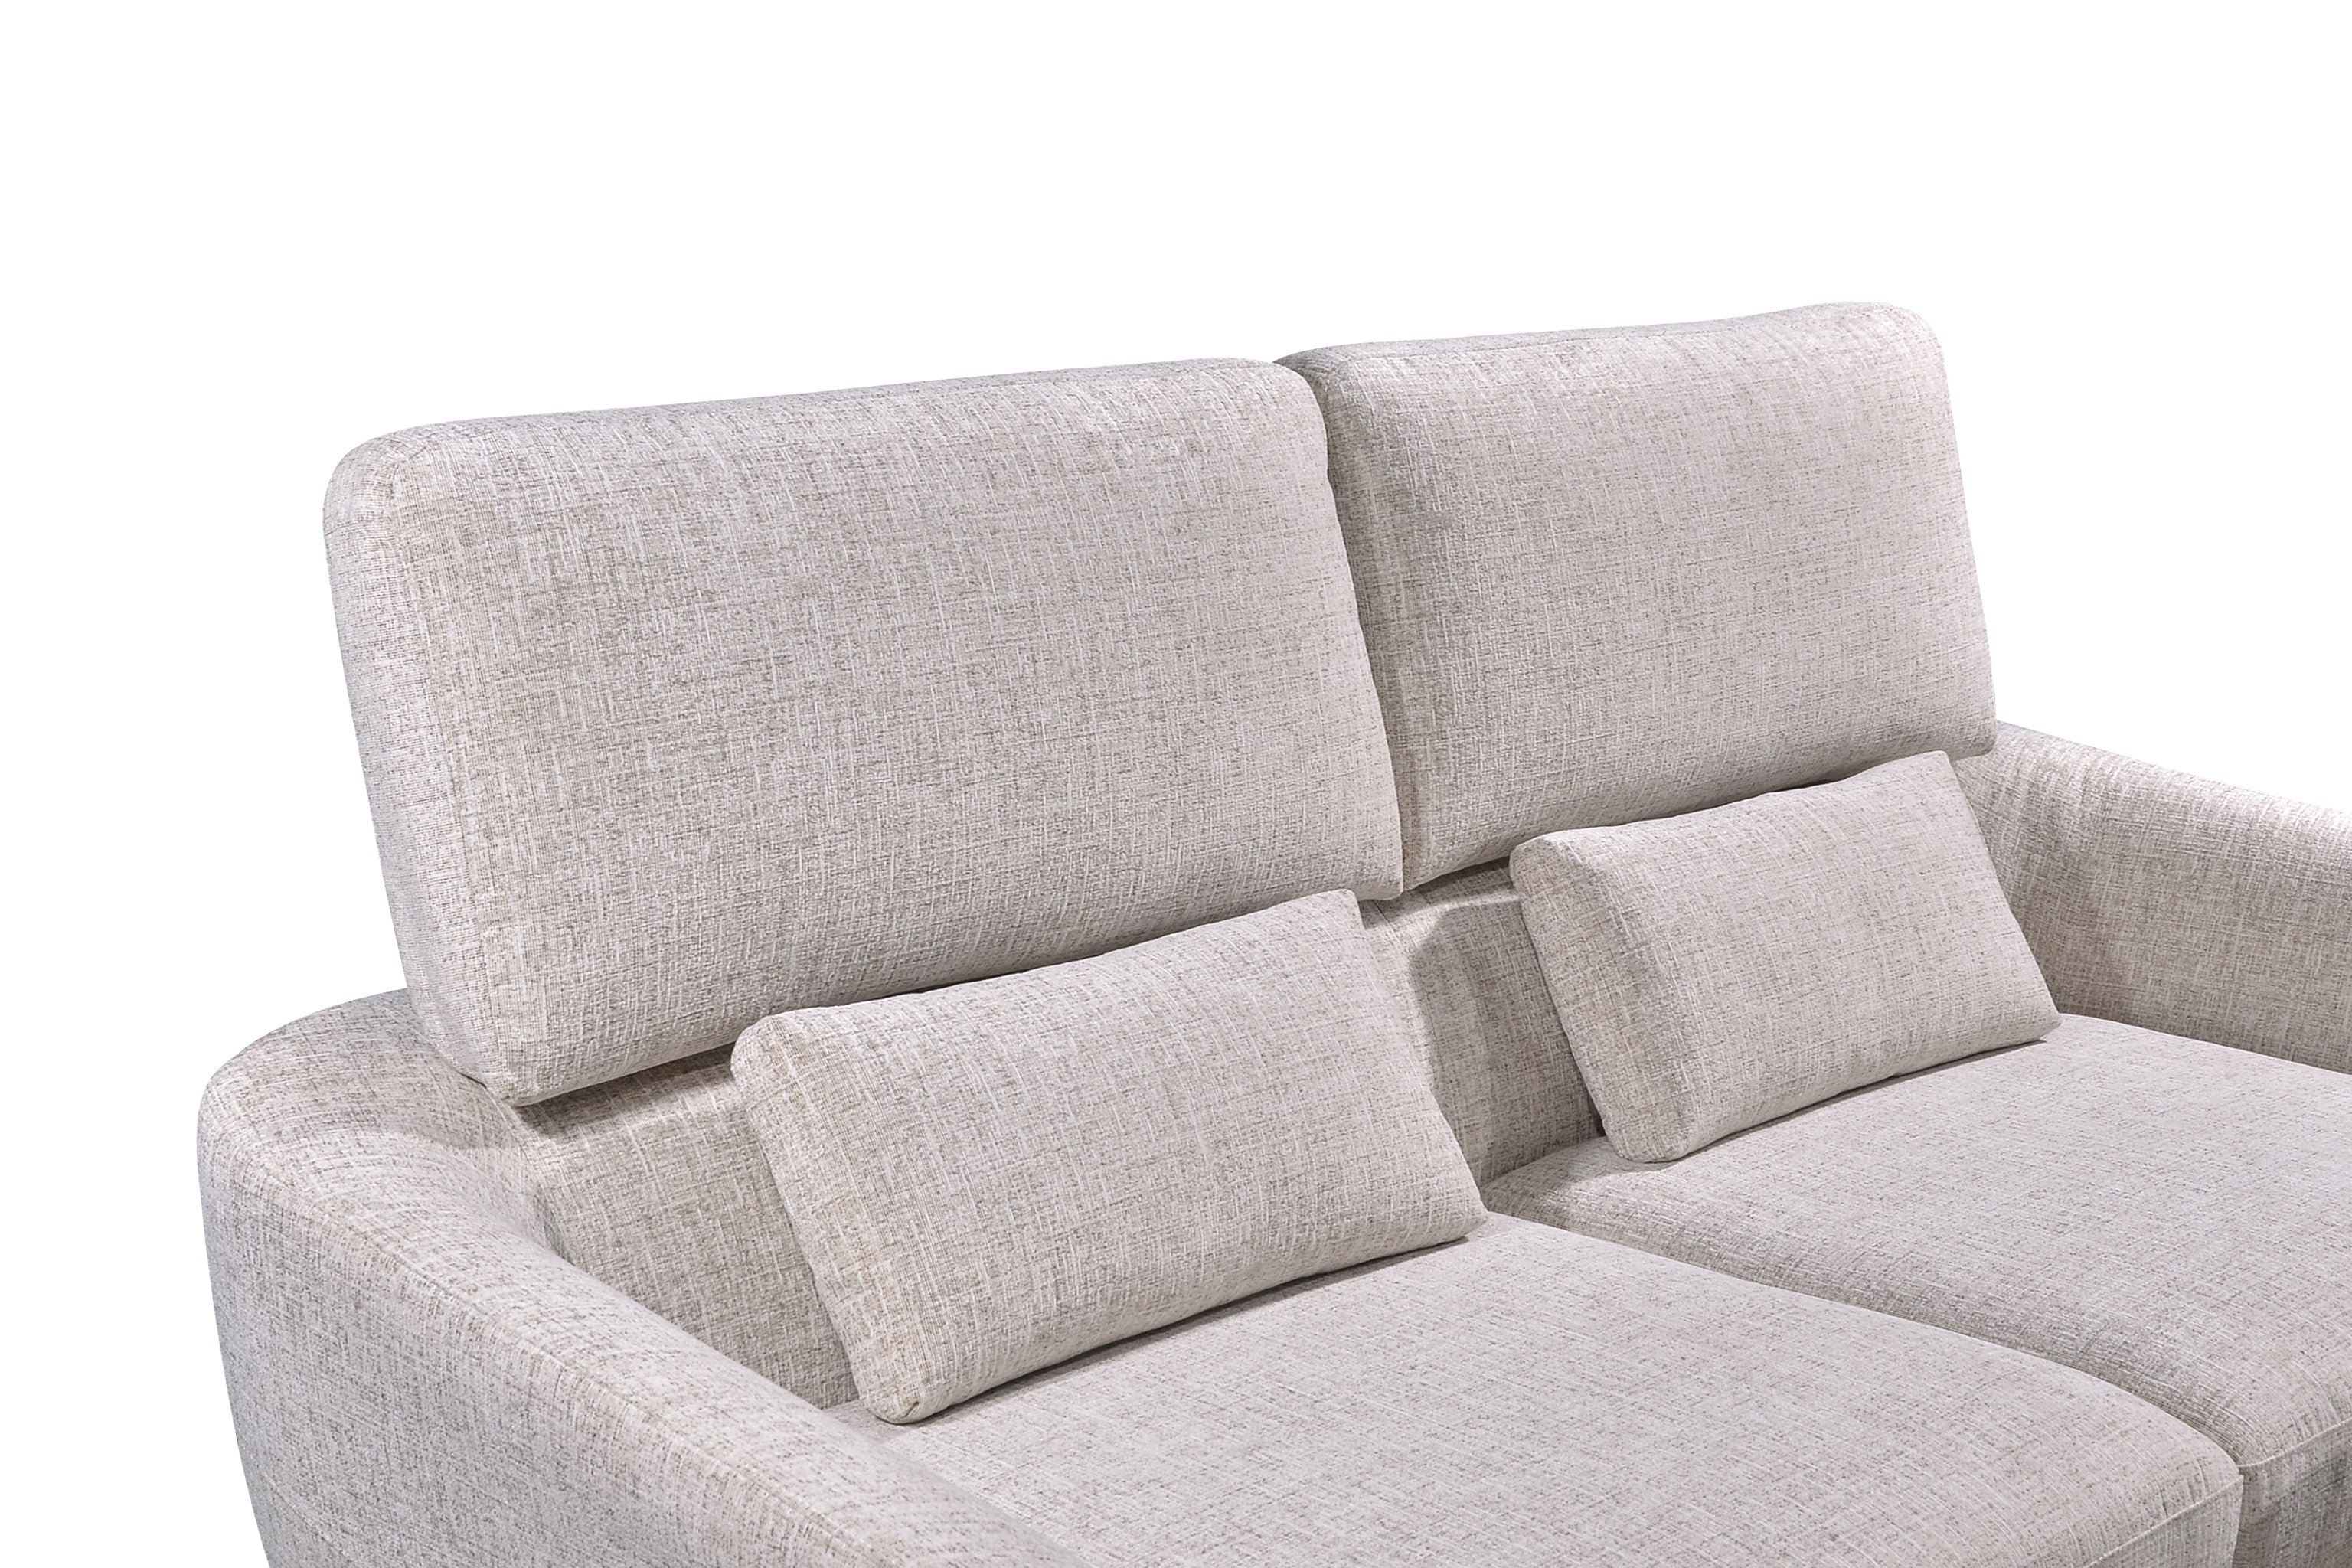 HELIOS Sectional Sofa by Castilla